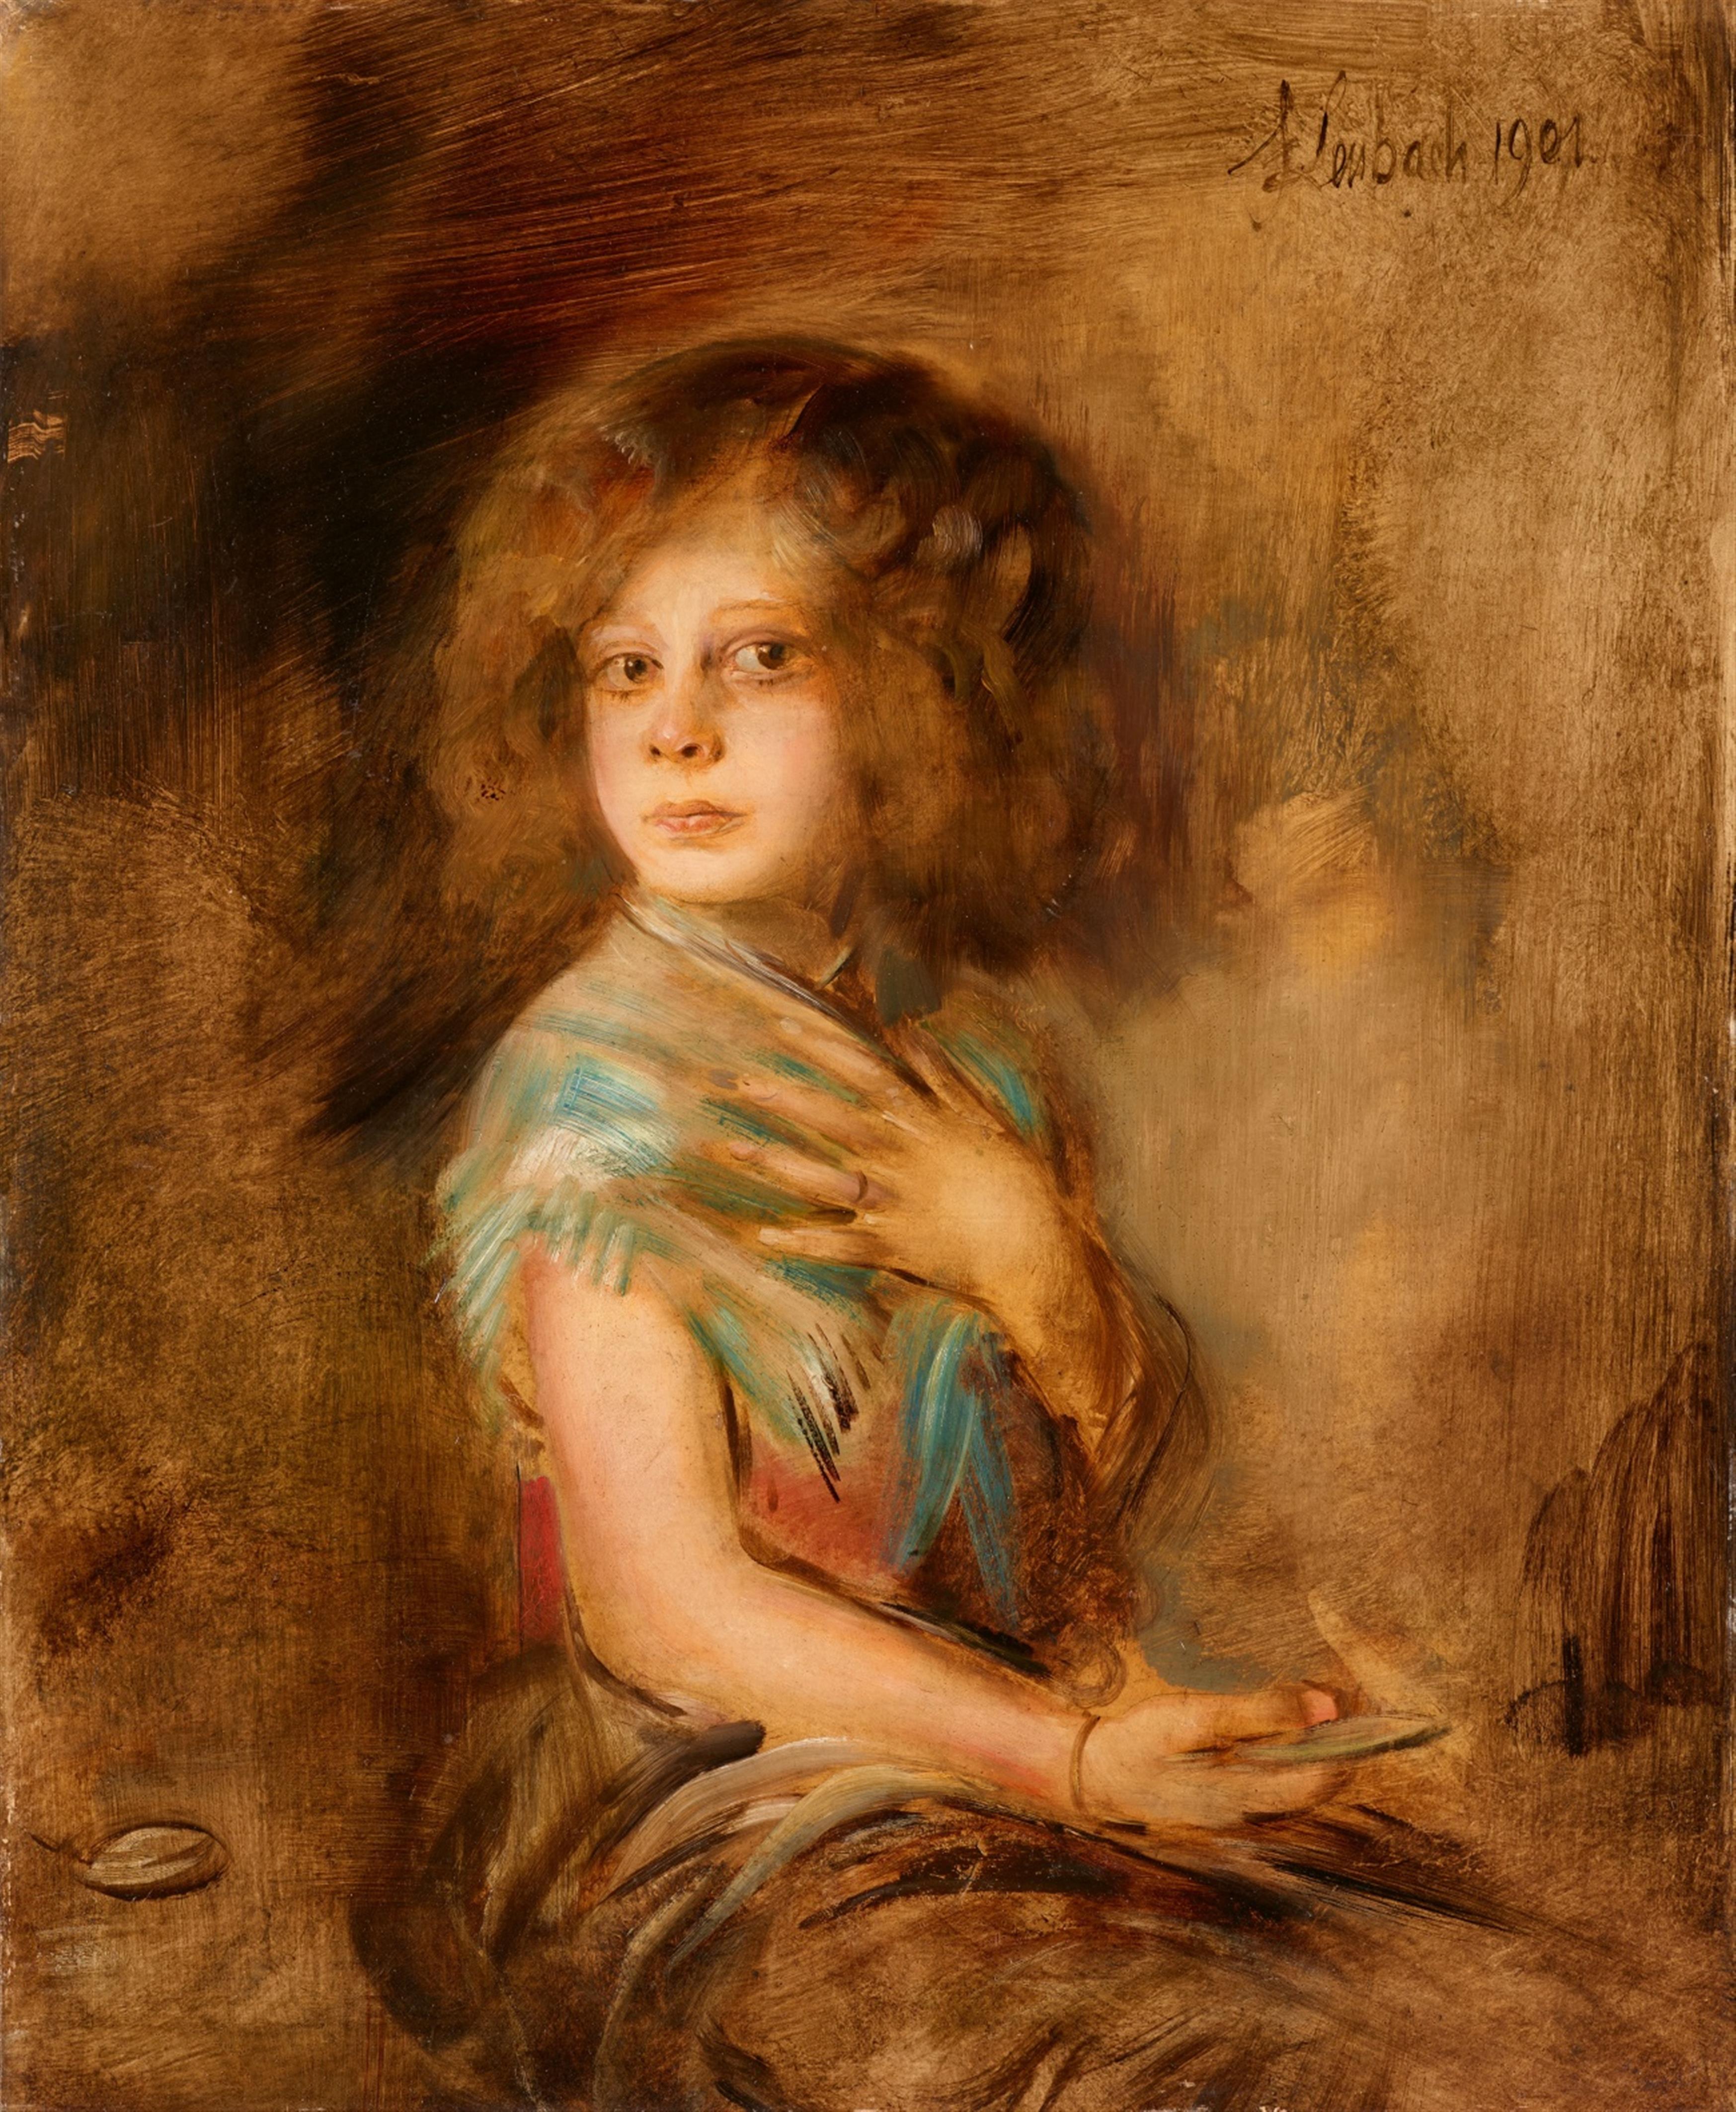 Franz Seraph von Lenbach - Portrait of a Girl (possibly Marion von Lenbach) - image-1